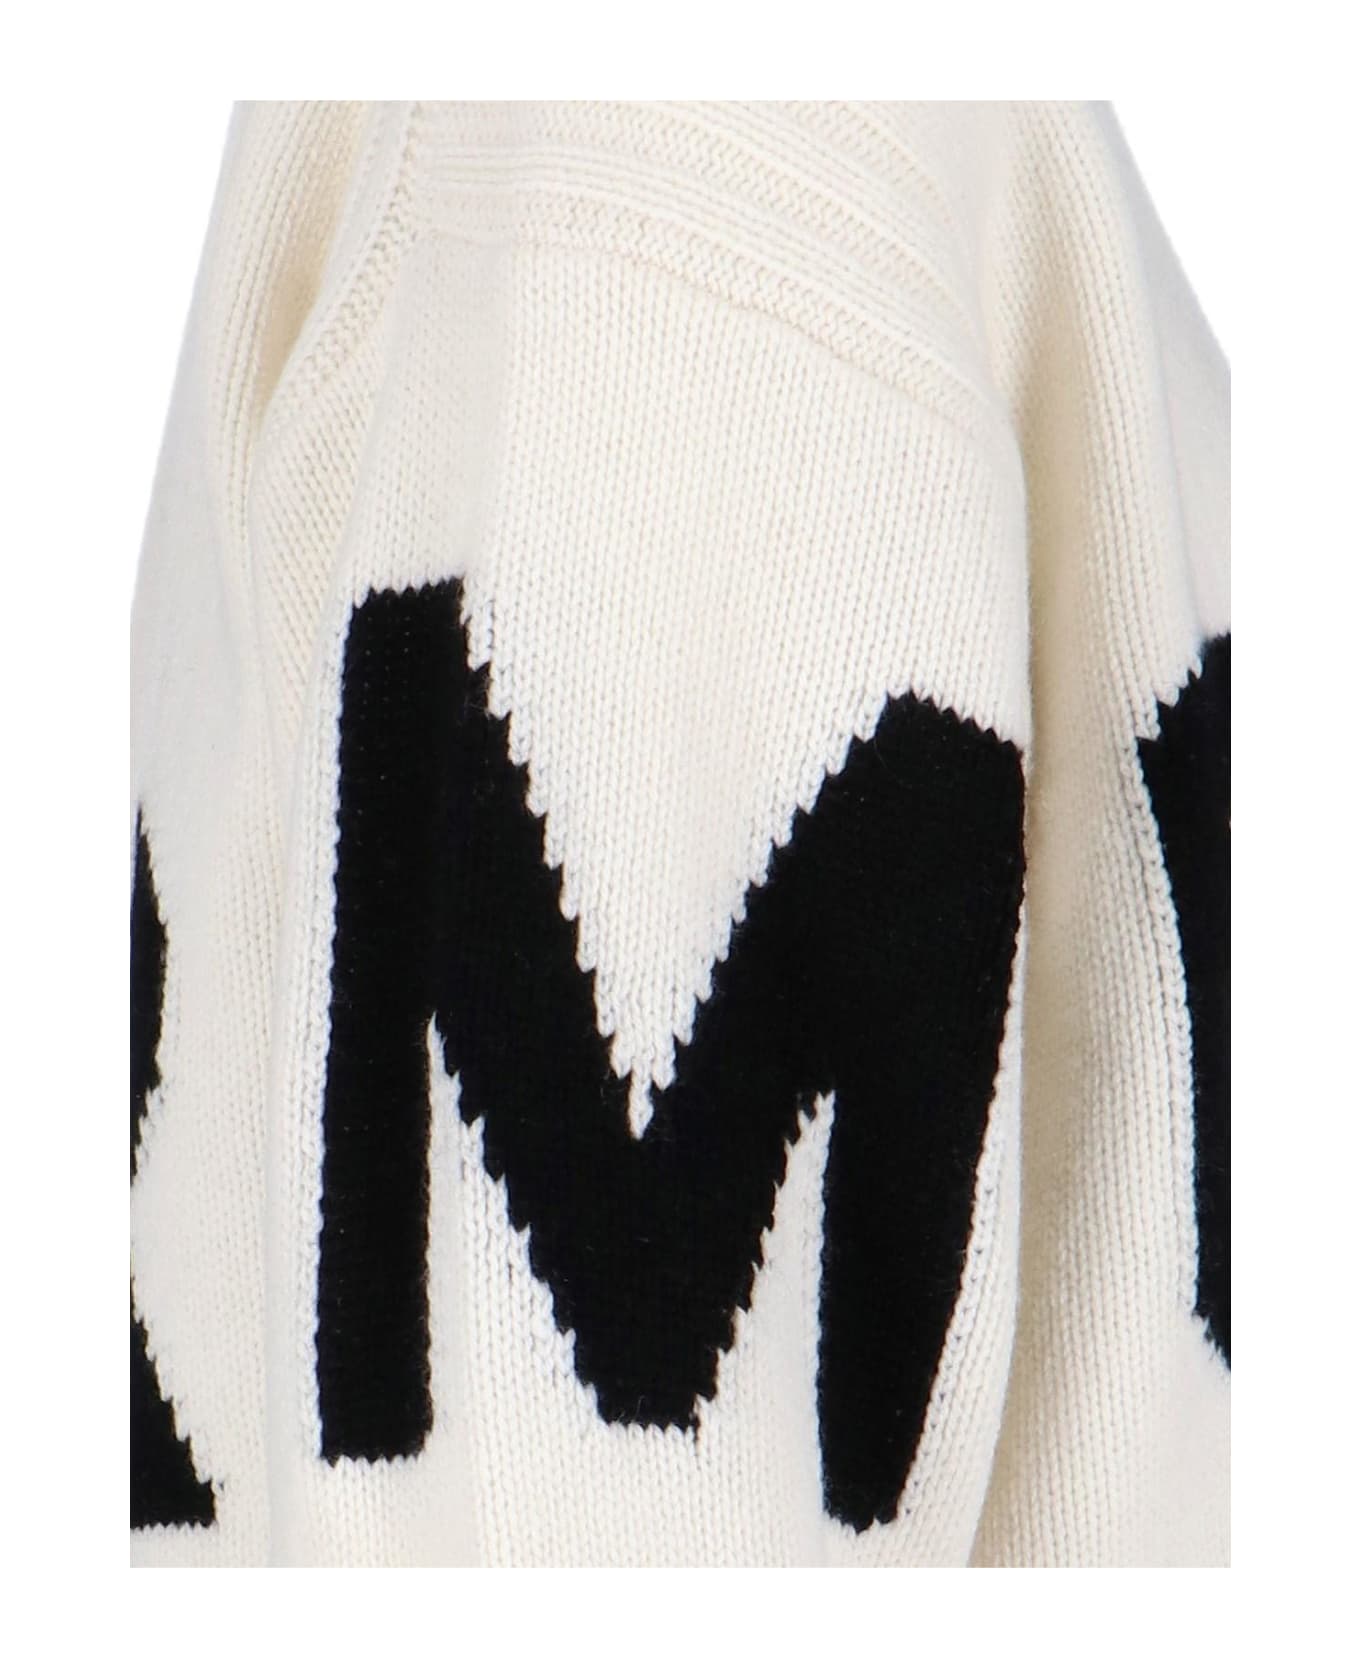 Moncler Logo Crew Neck Sweater - Bianco